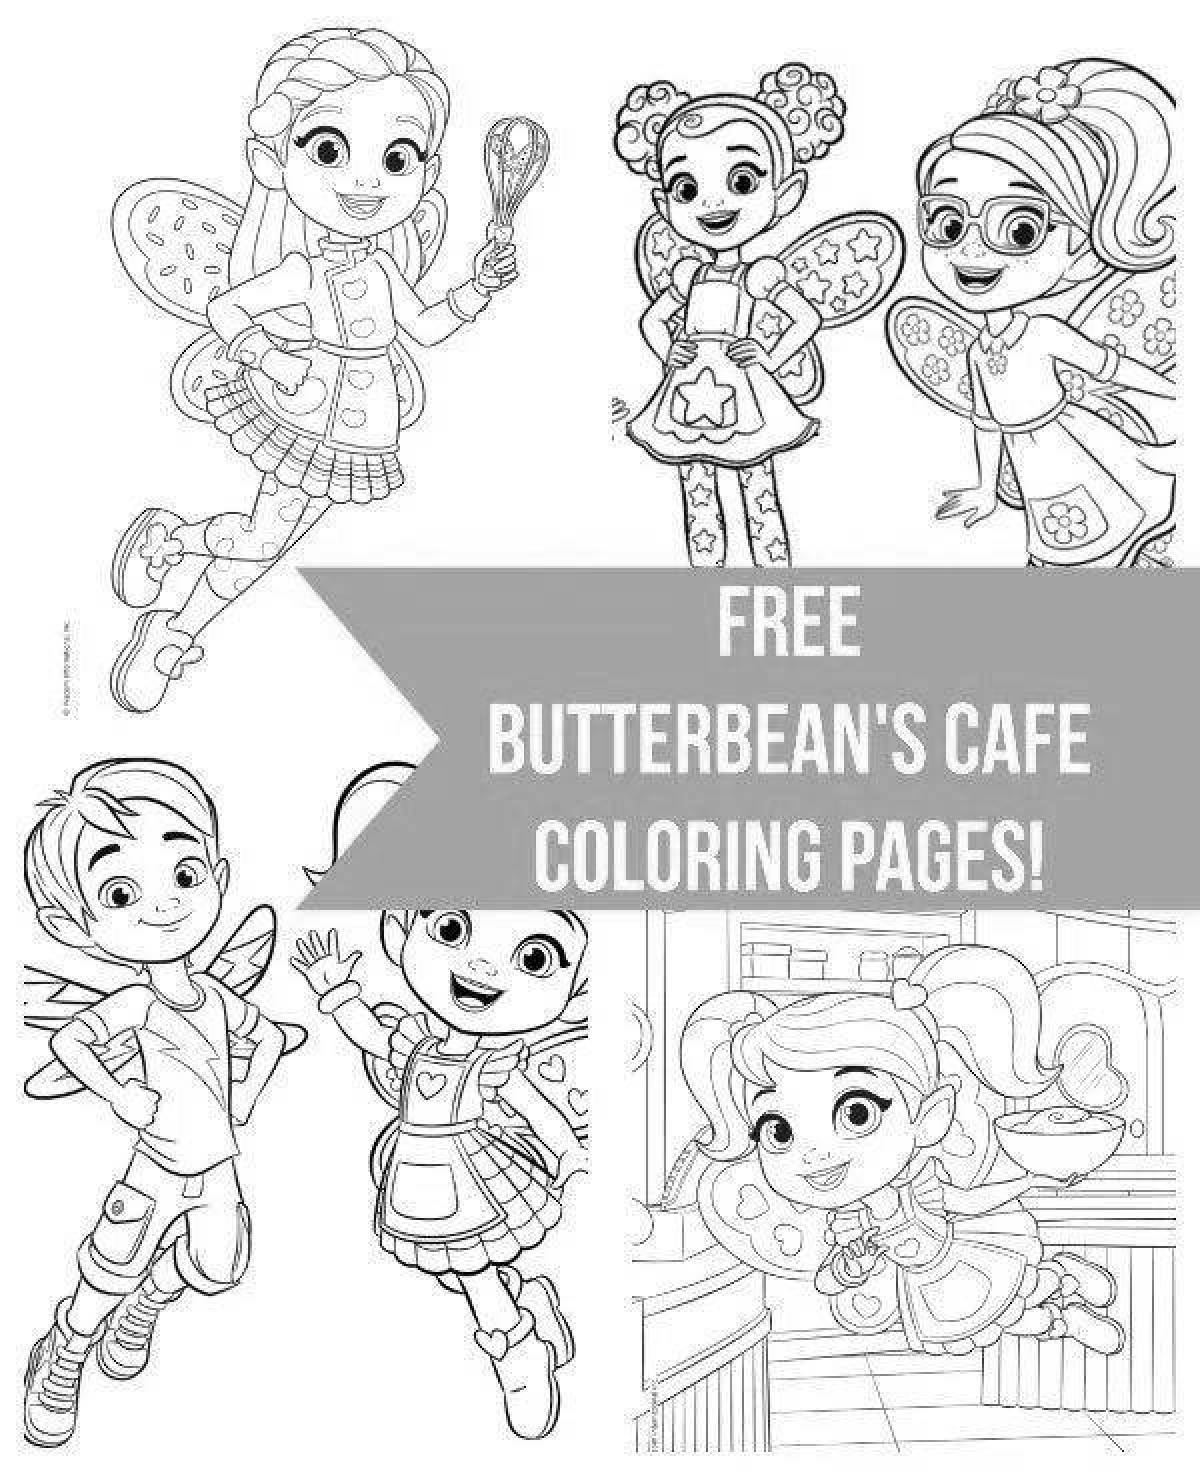 Fun coloring cafe butterbean